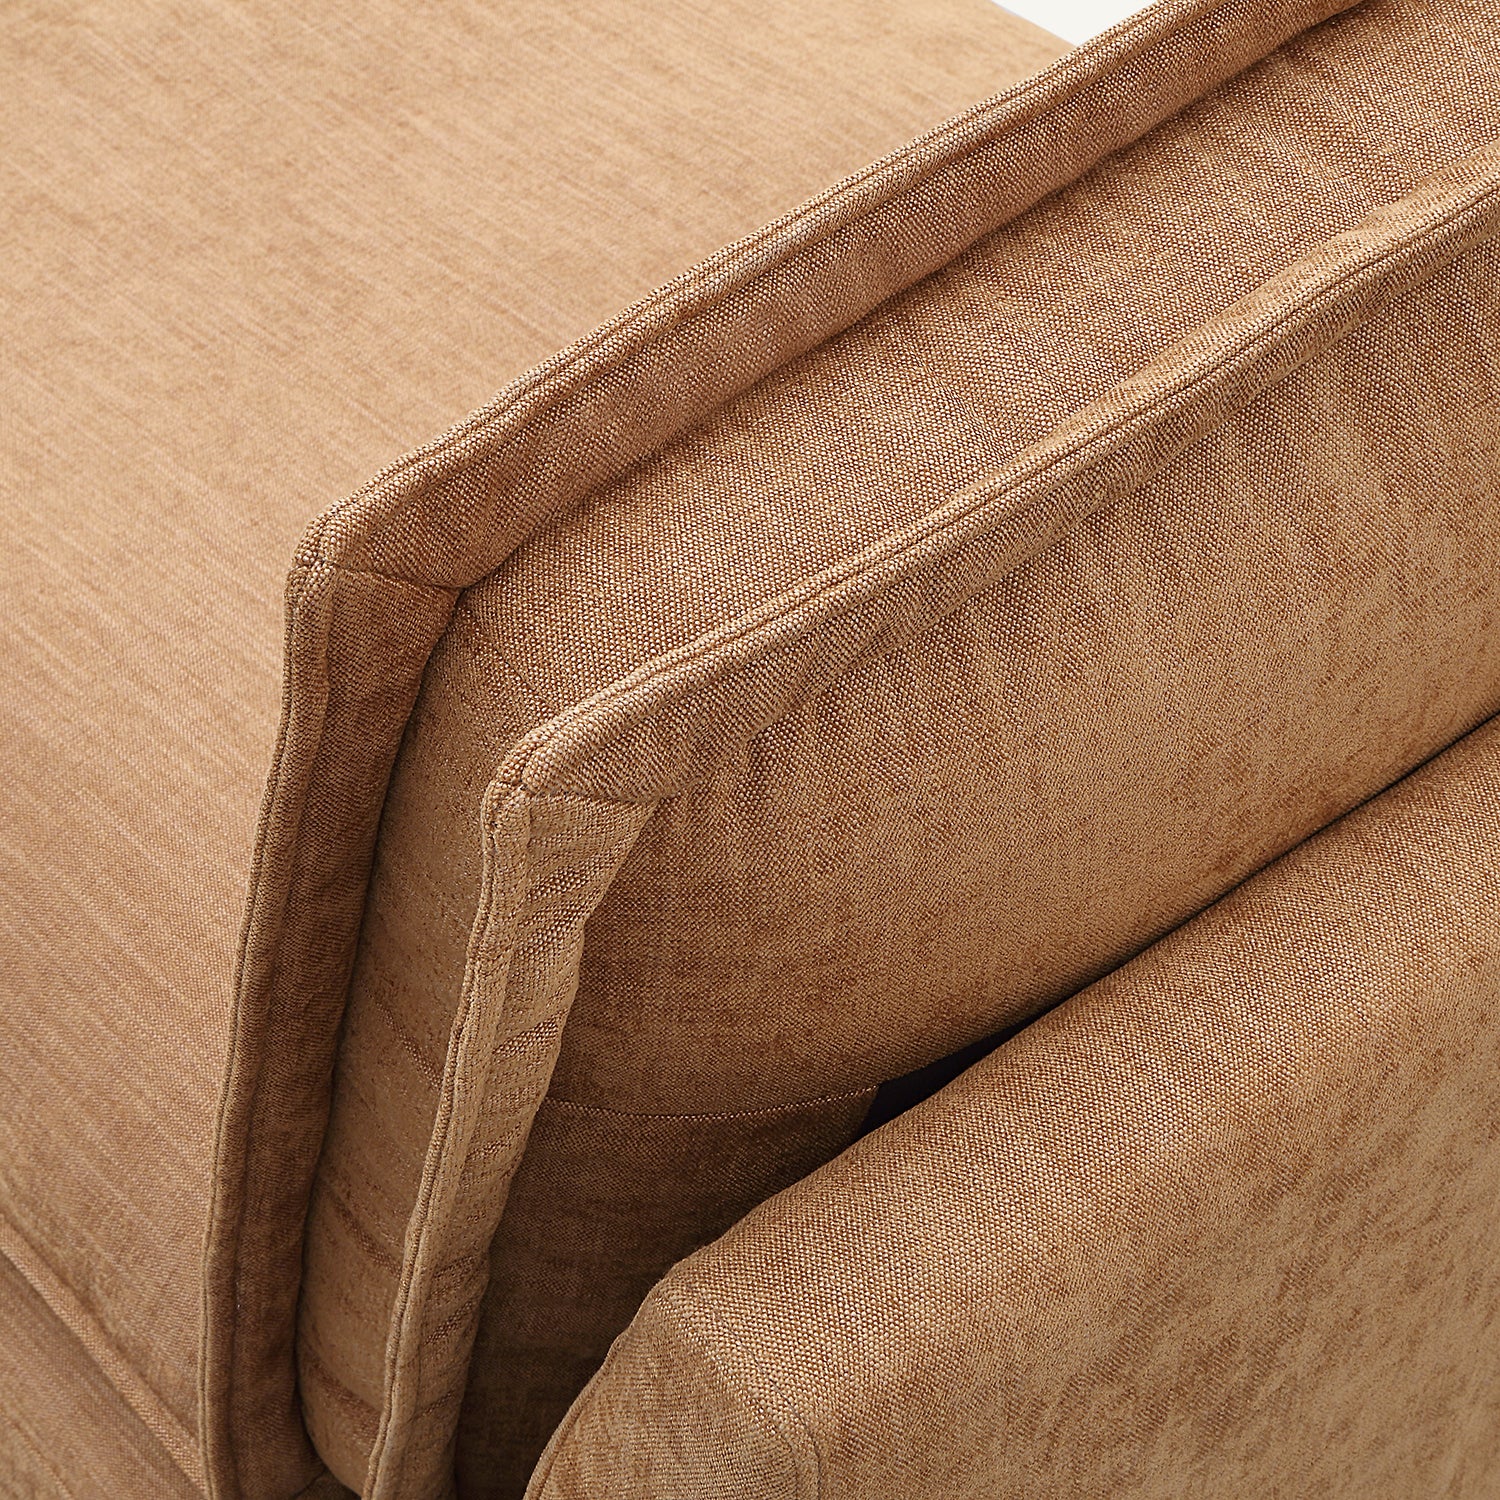 Stacked Tan Linen Loveseat Modular Sofa Bed